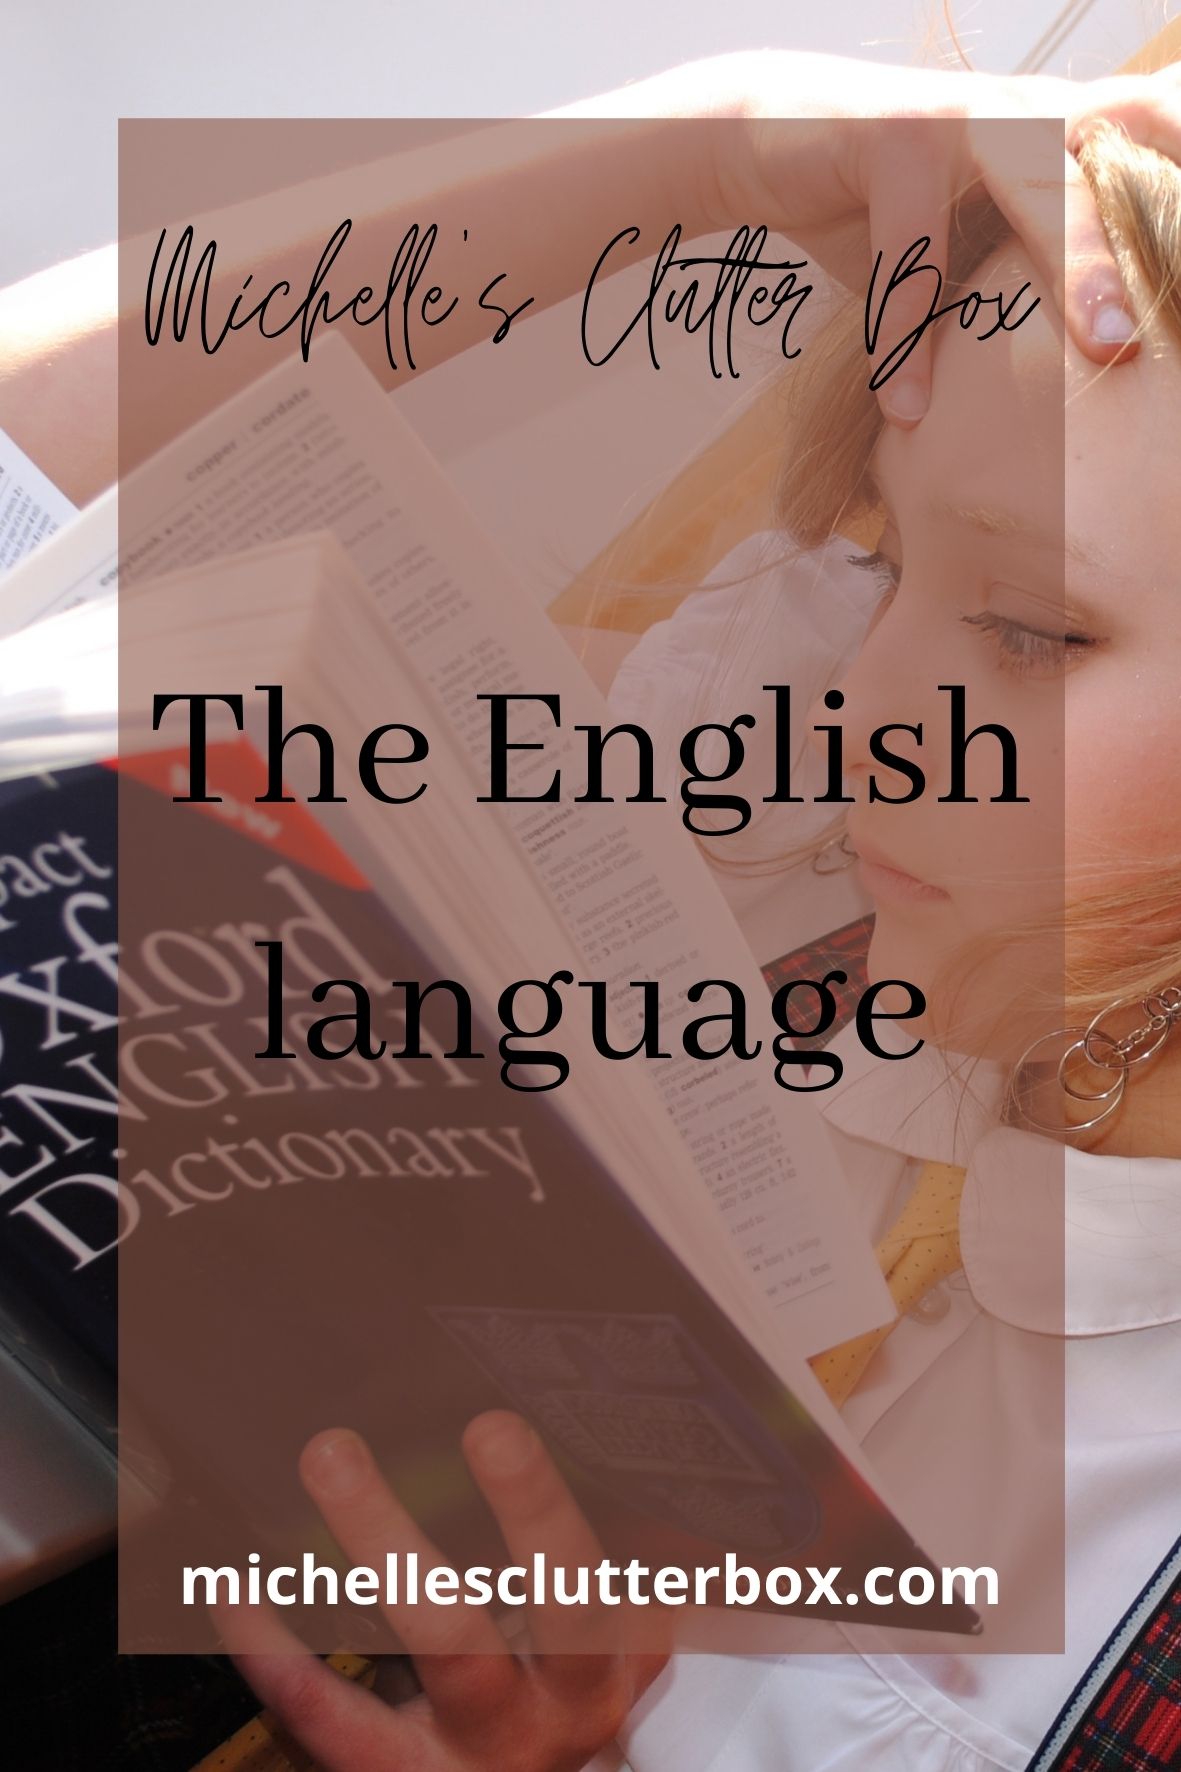 The English language